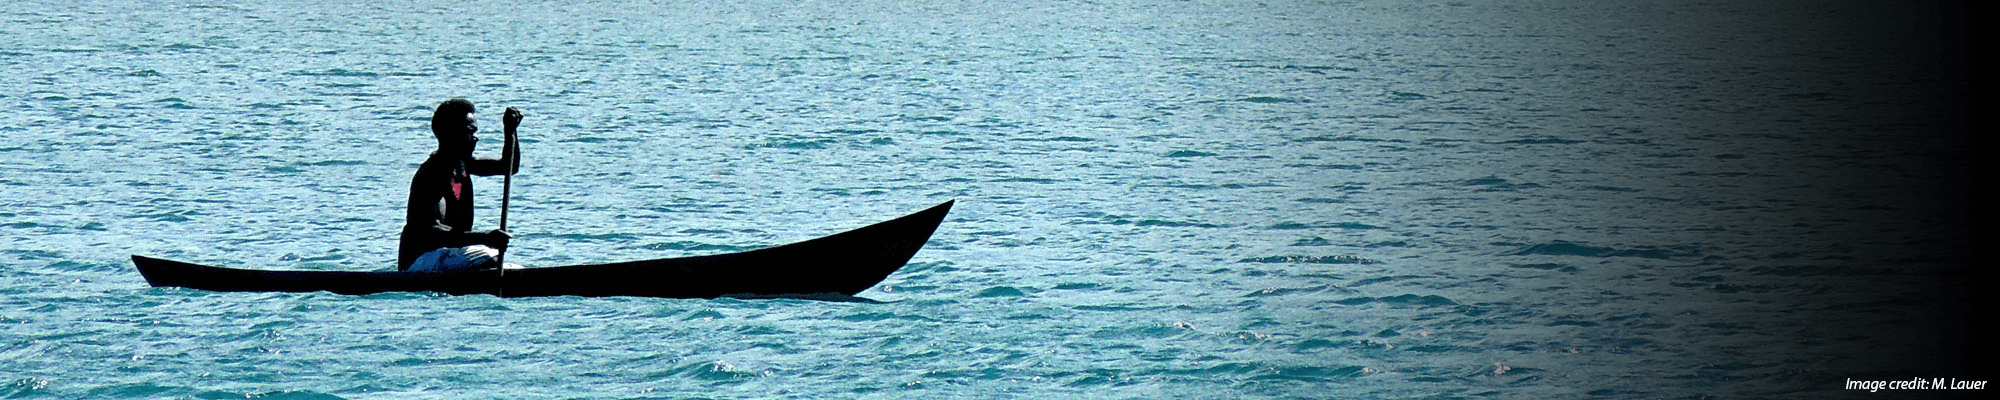 man paddles canoe in ocean